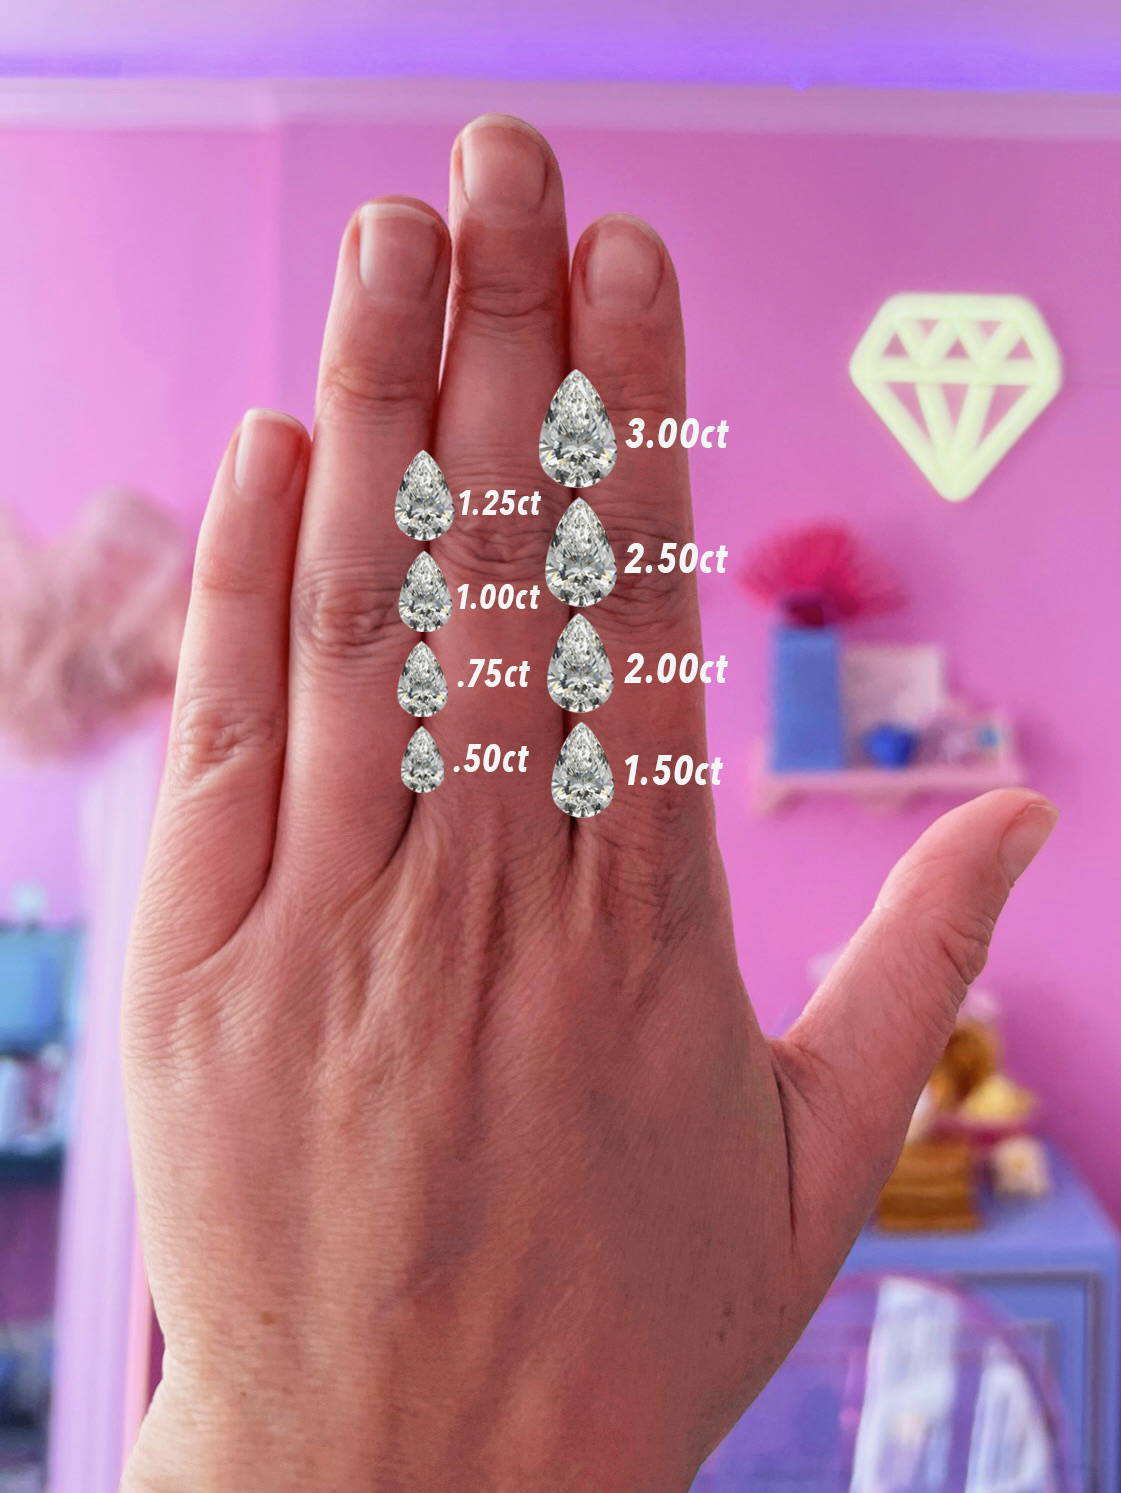 pear cut diamond carat sizes on a hand